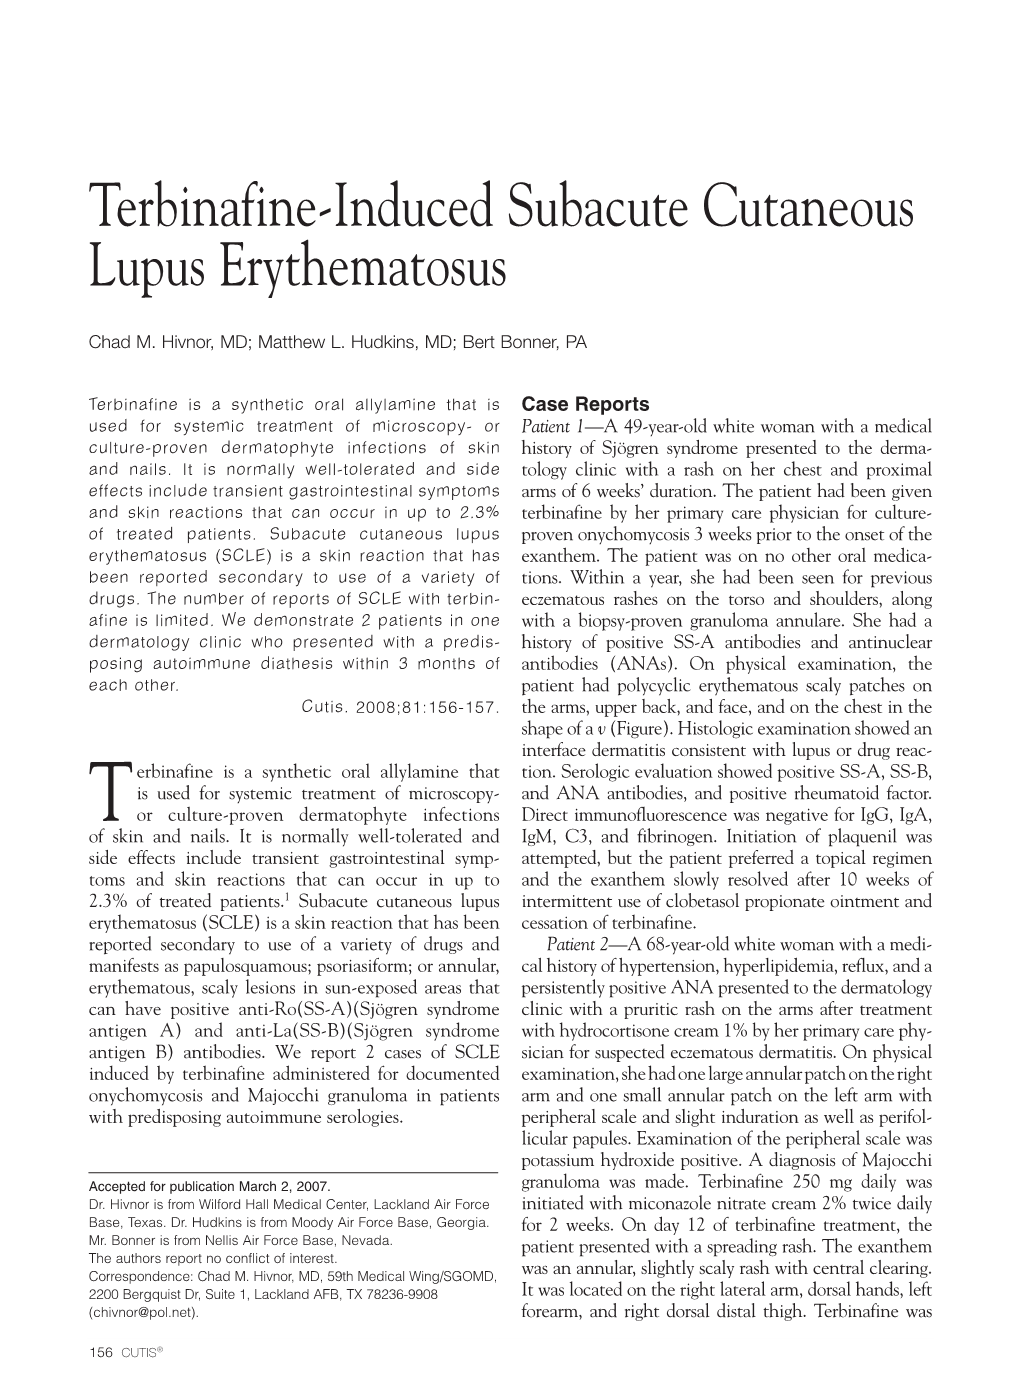 Terbinafine-Induced Subacute Cutaneous Lupus Erythematosus